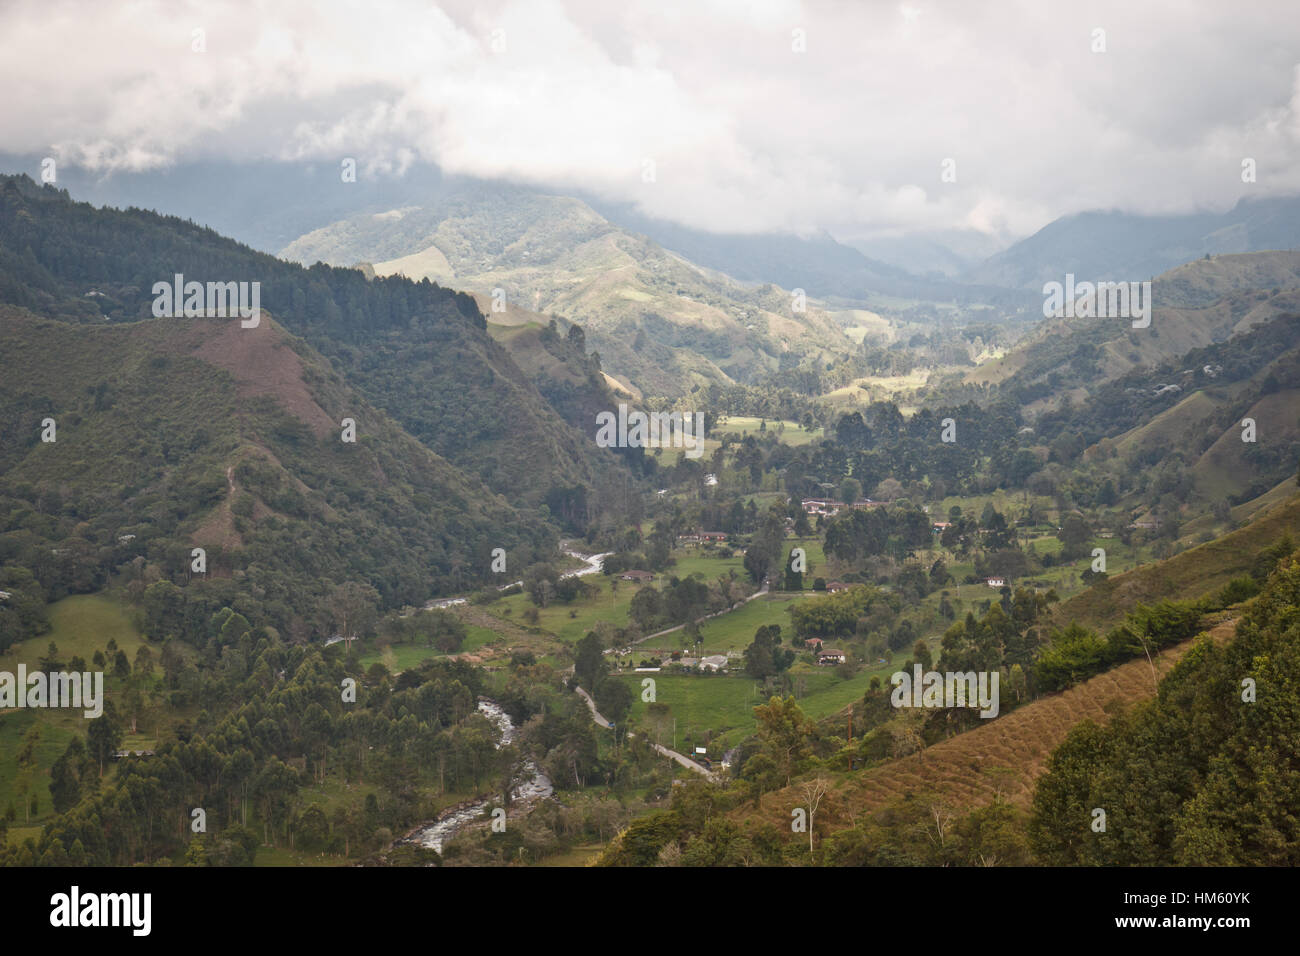 Armenia, Andes Mountains, Coffee Region, Bogotá